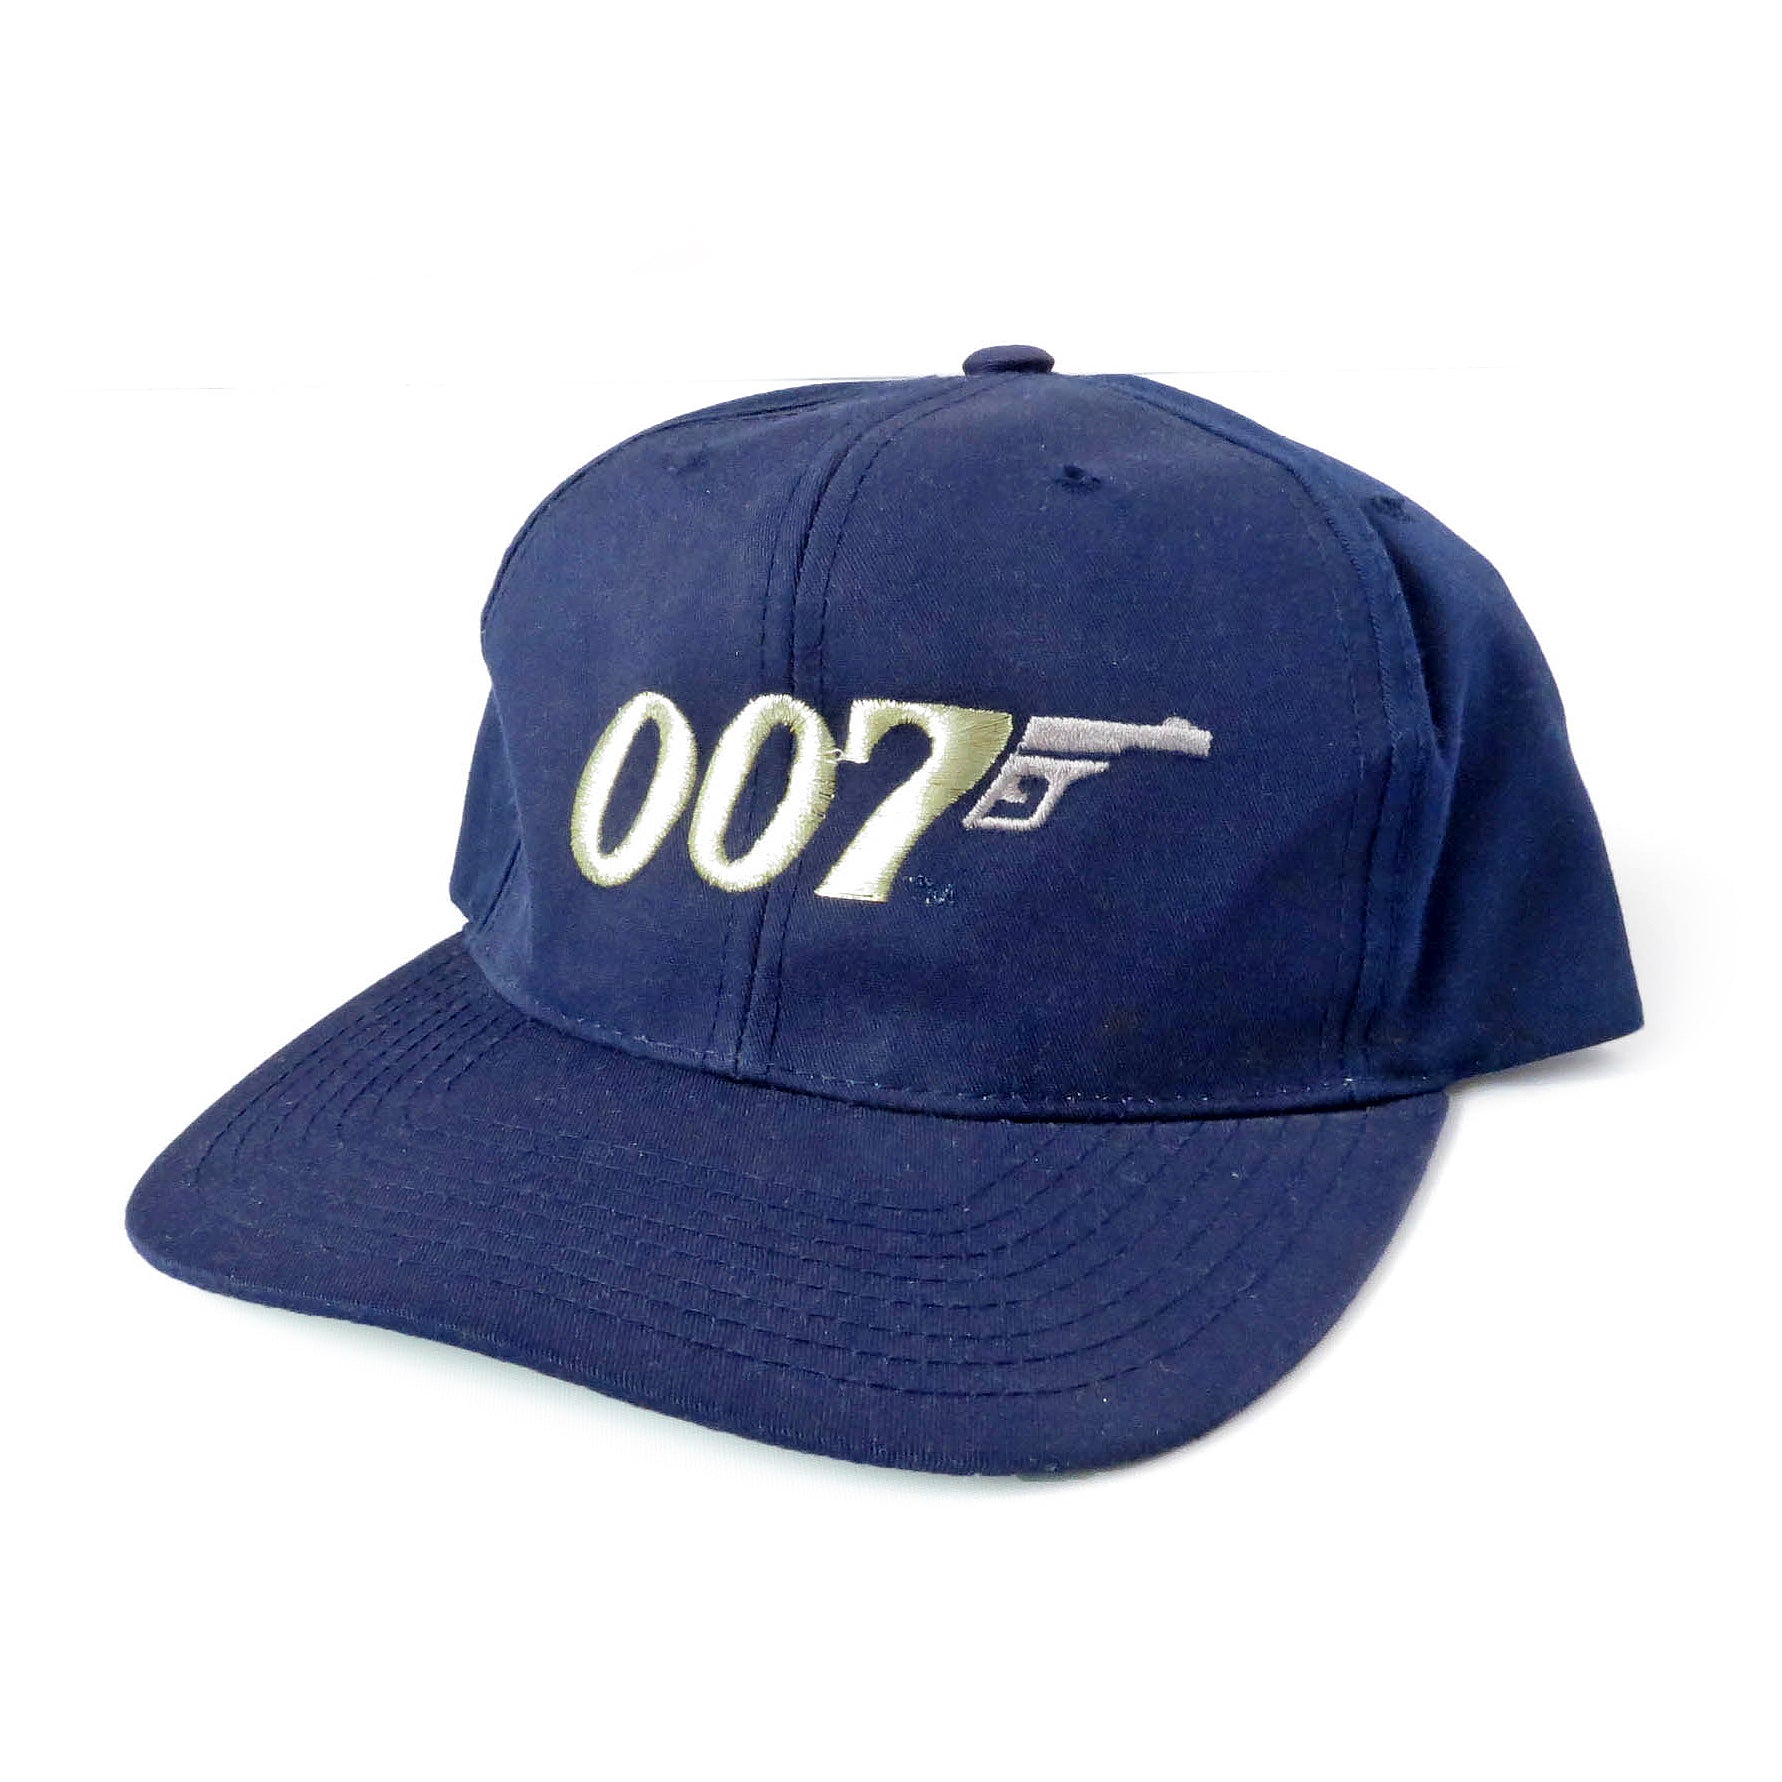 Vintage James Bond 007 Tomorrow Never Dies Snapback Hat